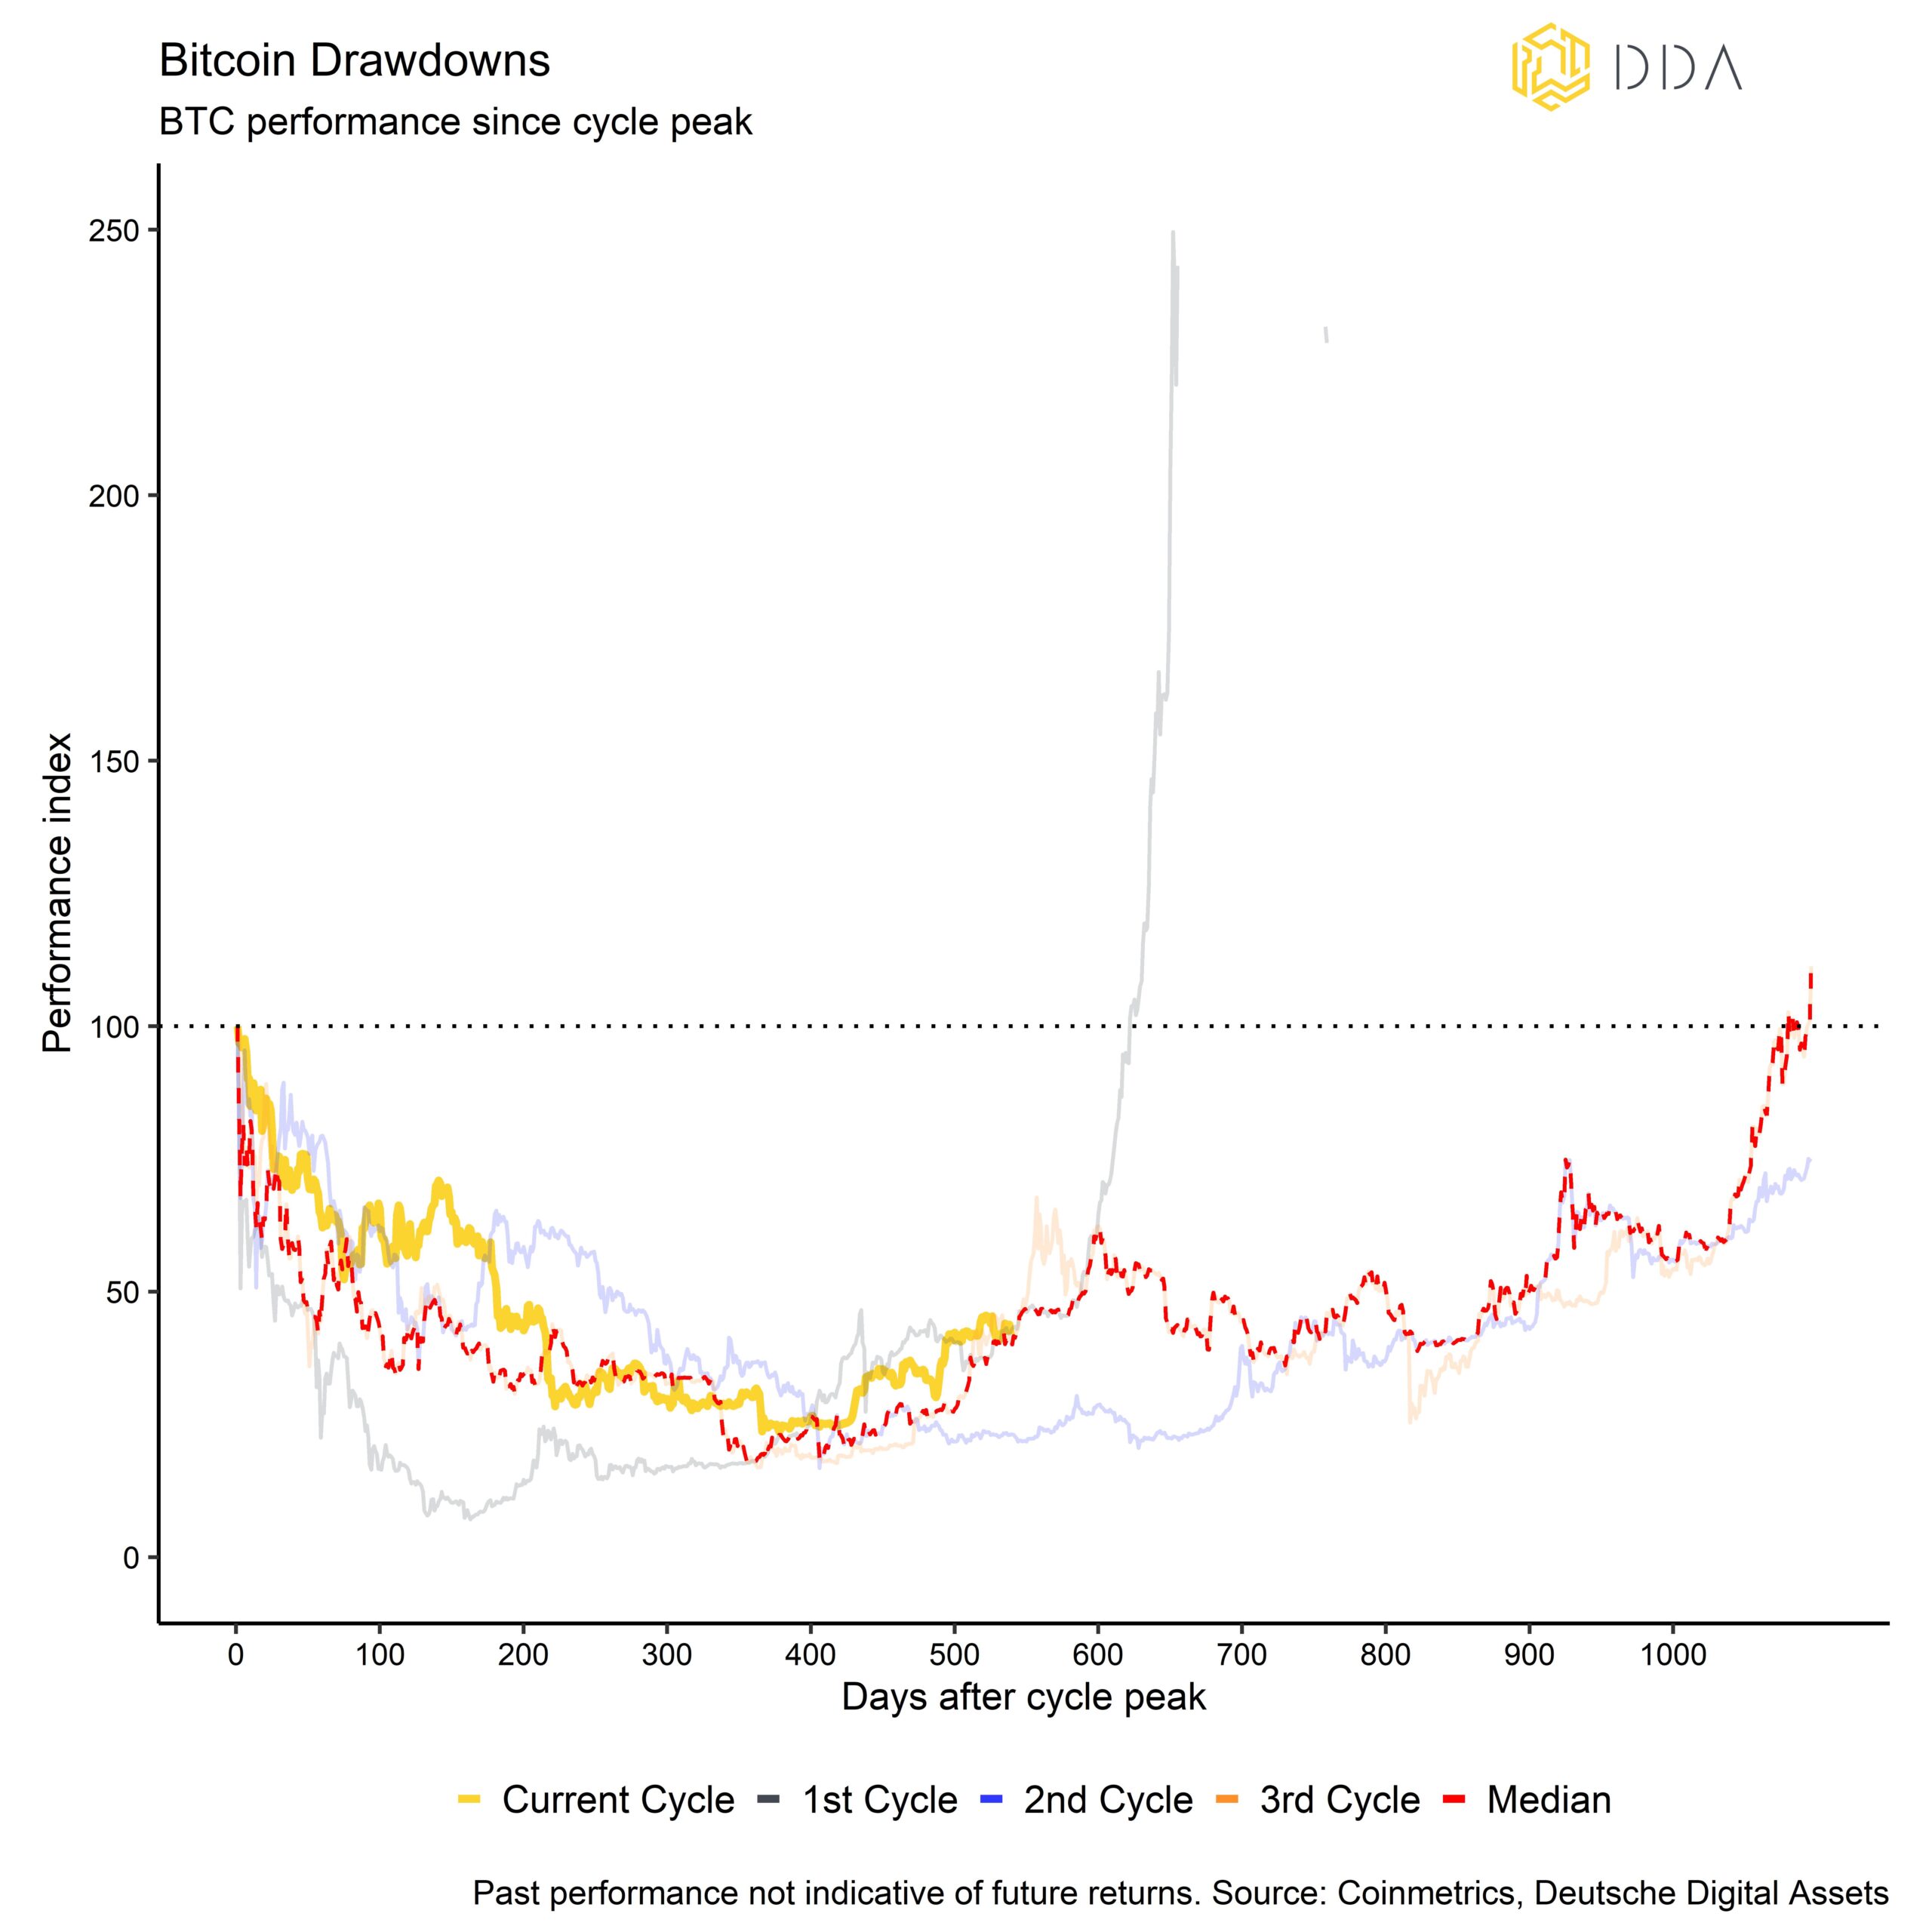 Bitcoin drawdowns